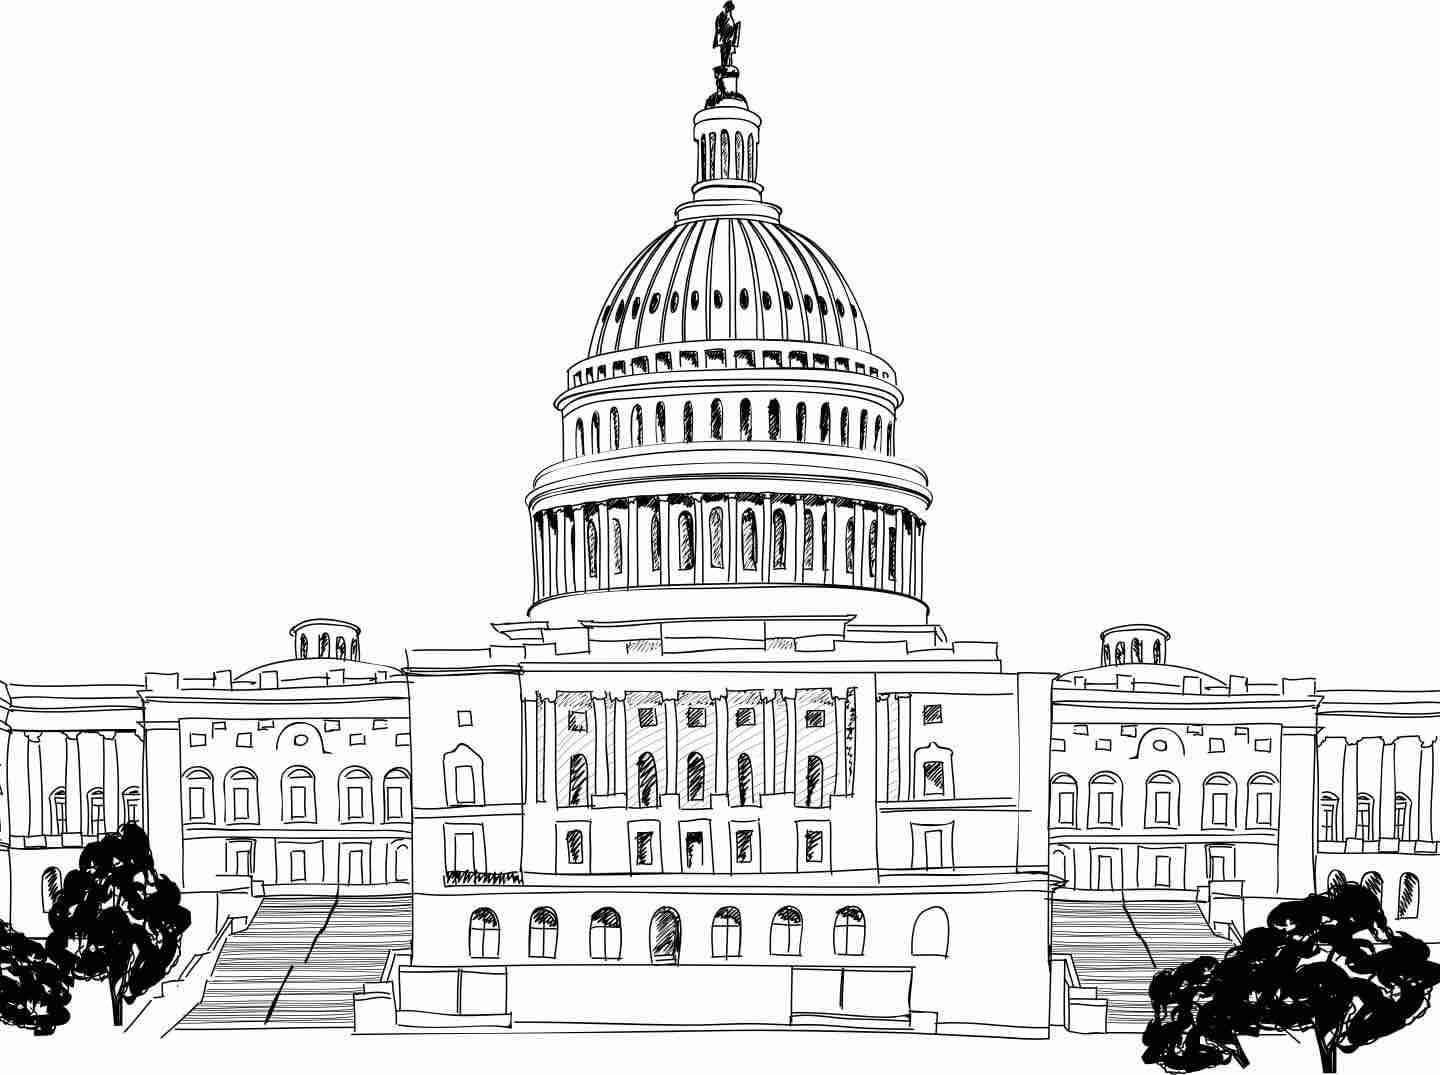 U.S. Capitol Building